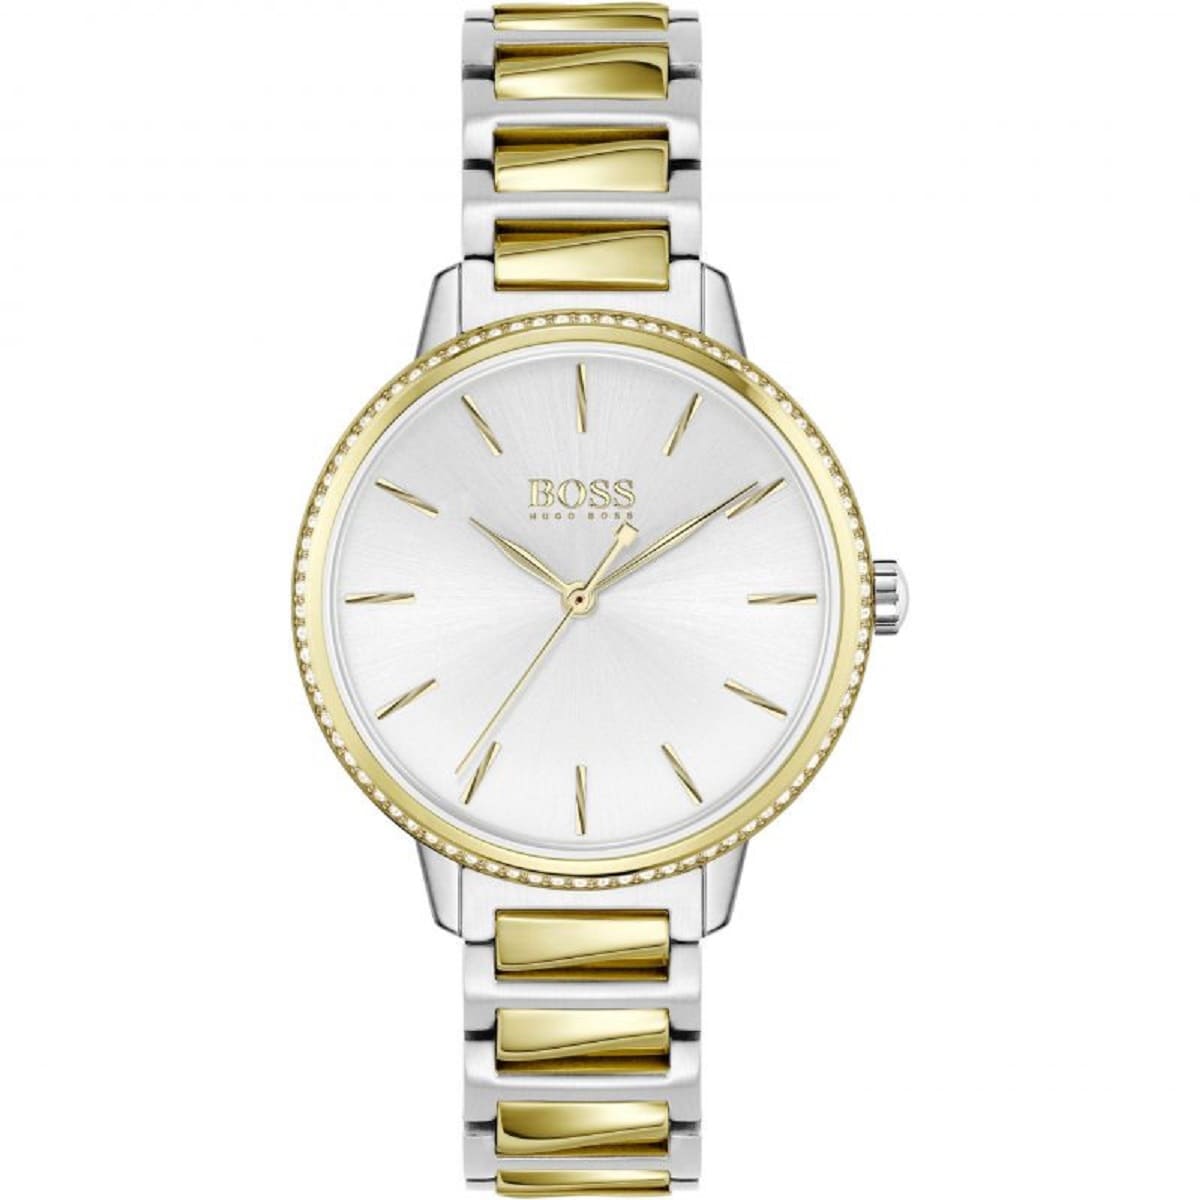 1502568_original-hogo-boss-women-watch-egypt-silver-gold-metal-strap-silver-dial